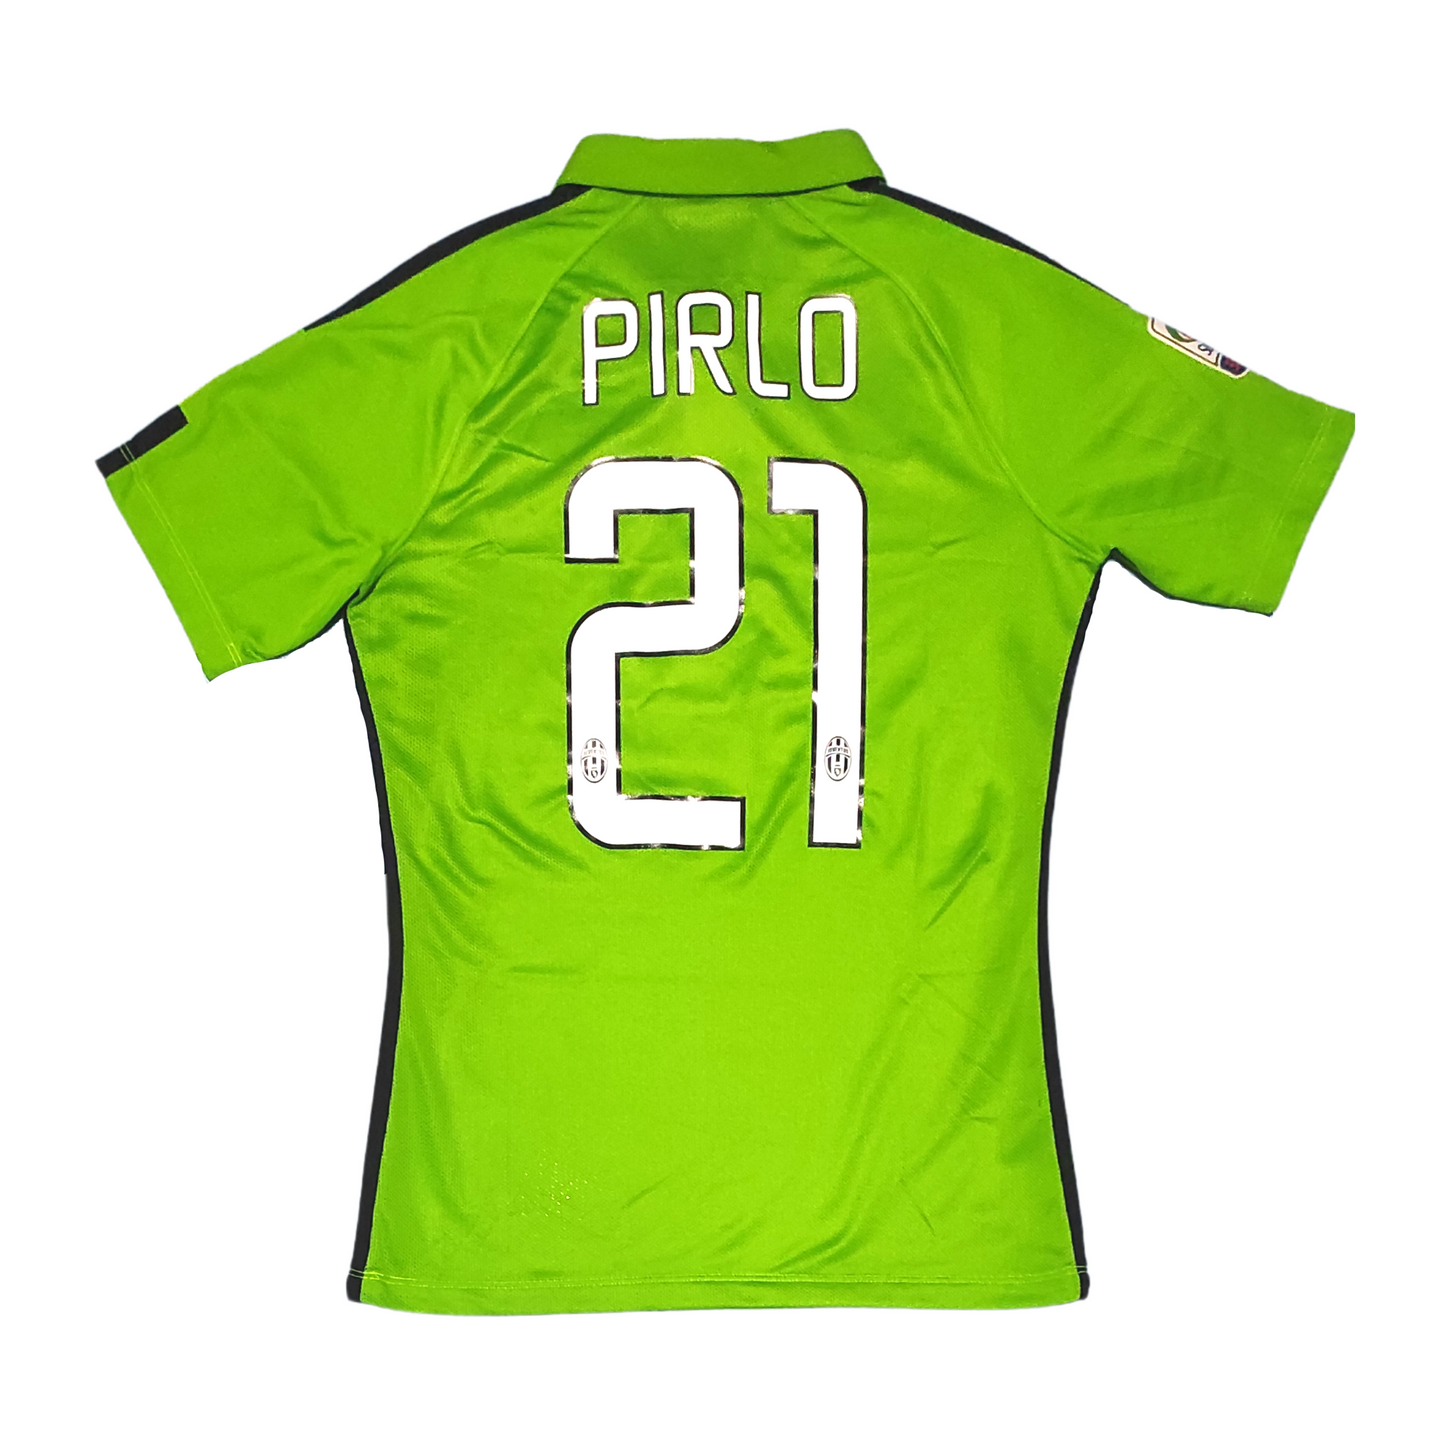 Juventus Third Player Issue Shirt 2014-2015 Pirlo (M)